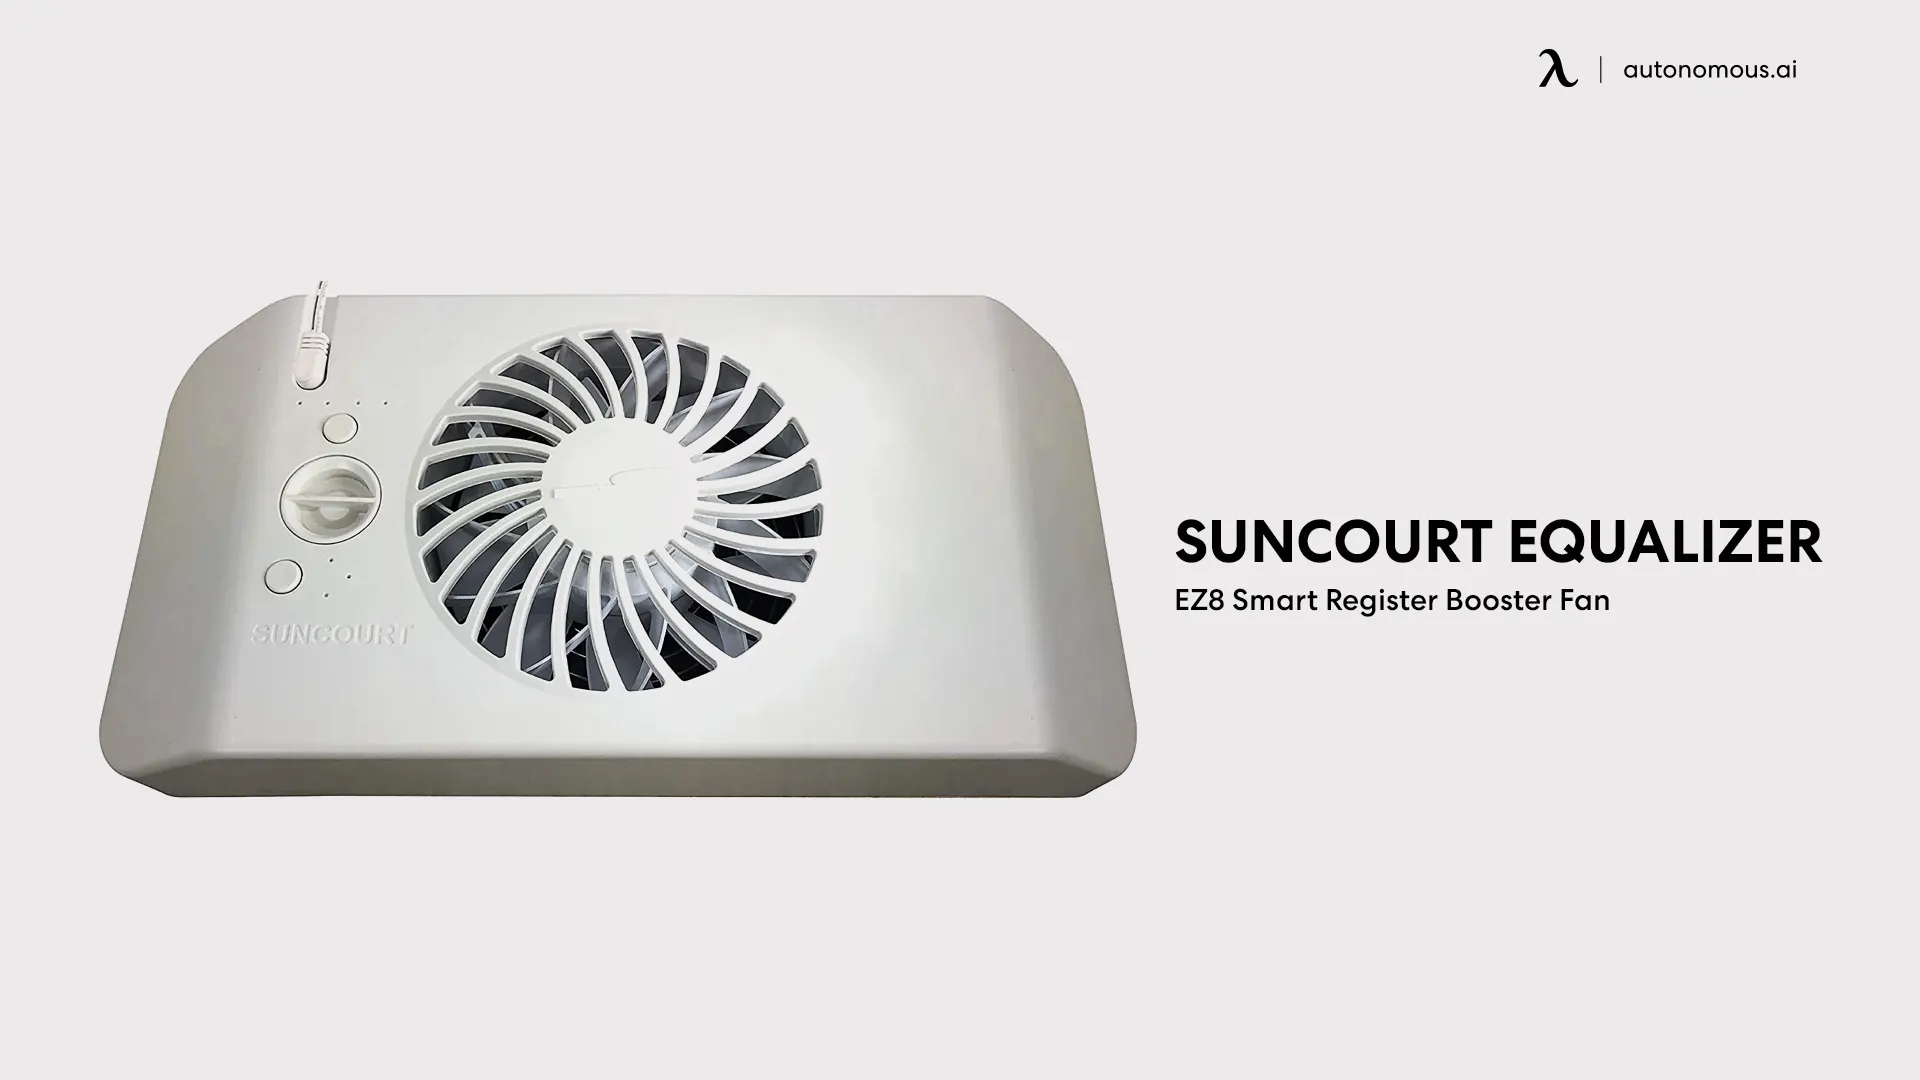 EZ8 Smart Register Booster Fan by Suncourt Equalizer